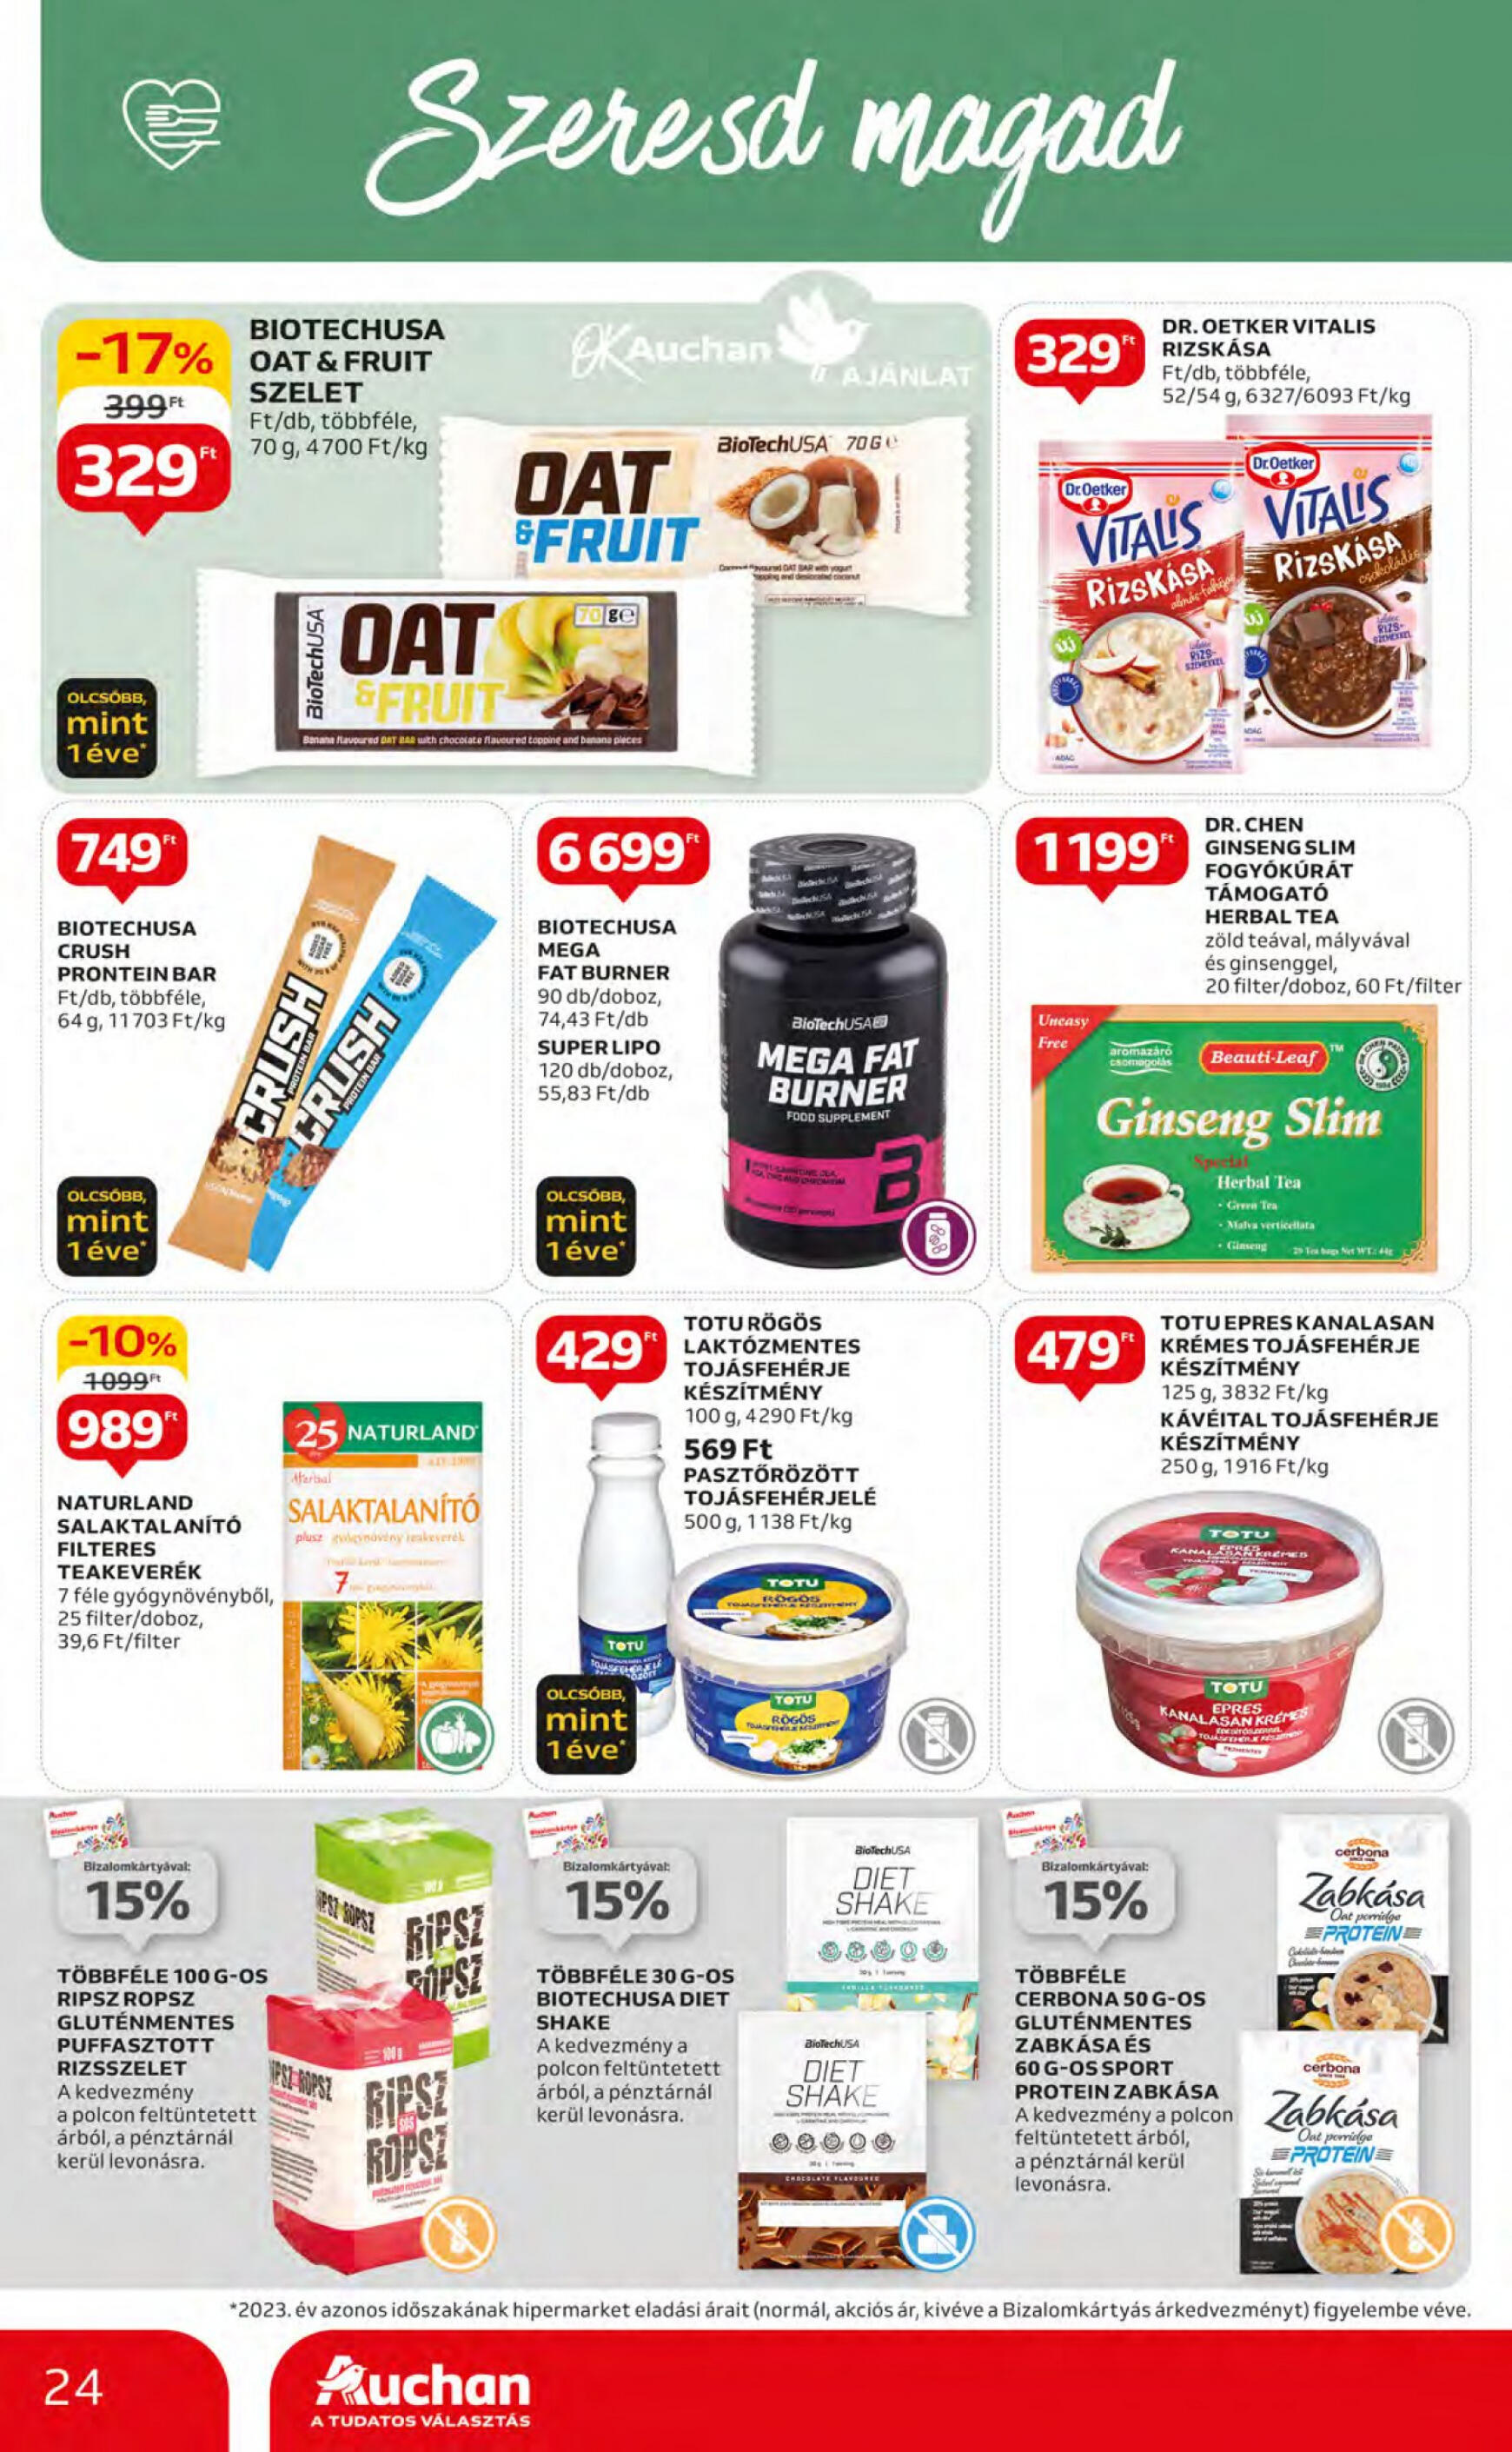 auchan - Aktuális újság Auchan 05.09. - 05.15. - page: 24